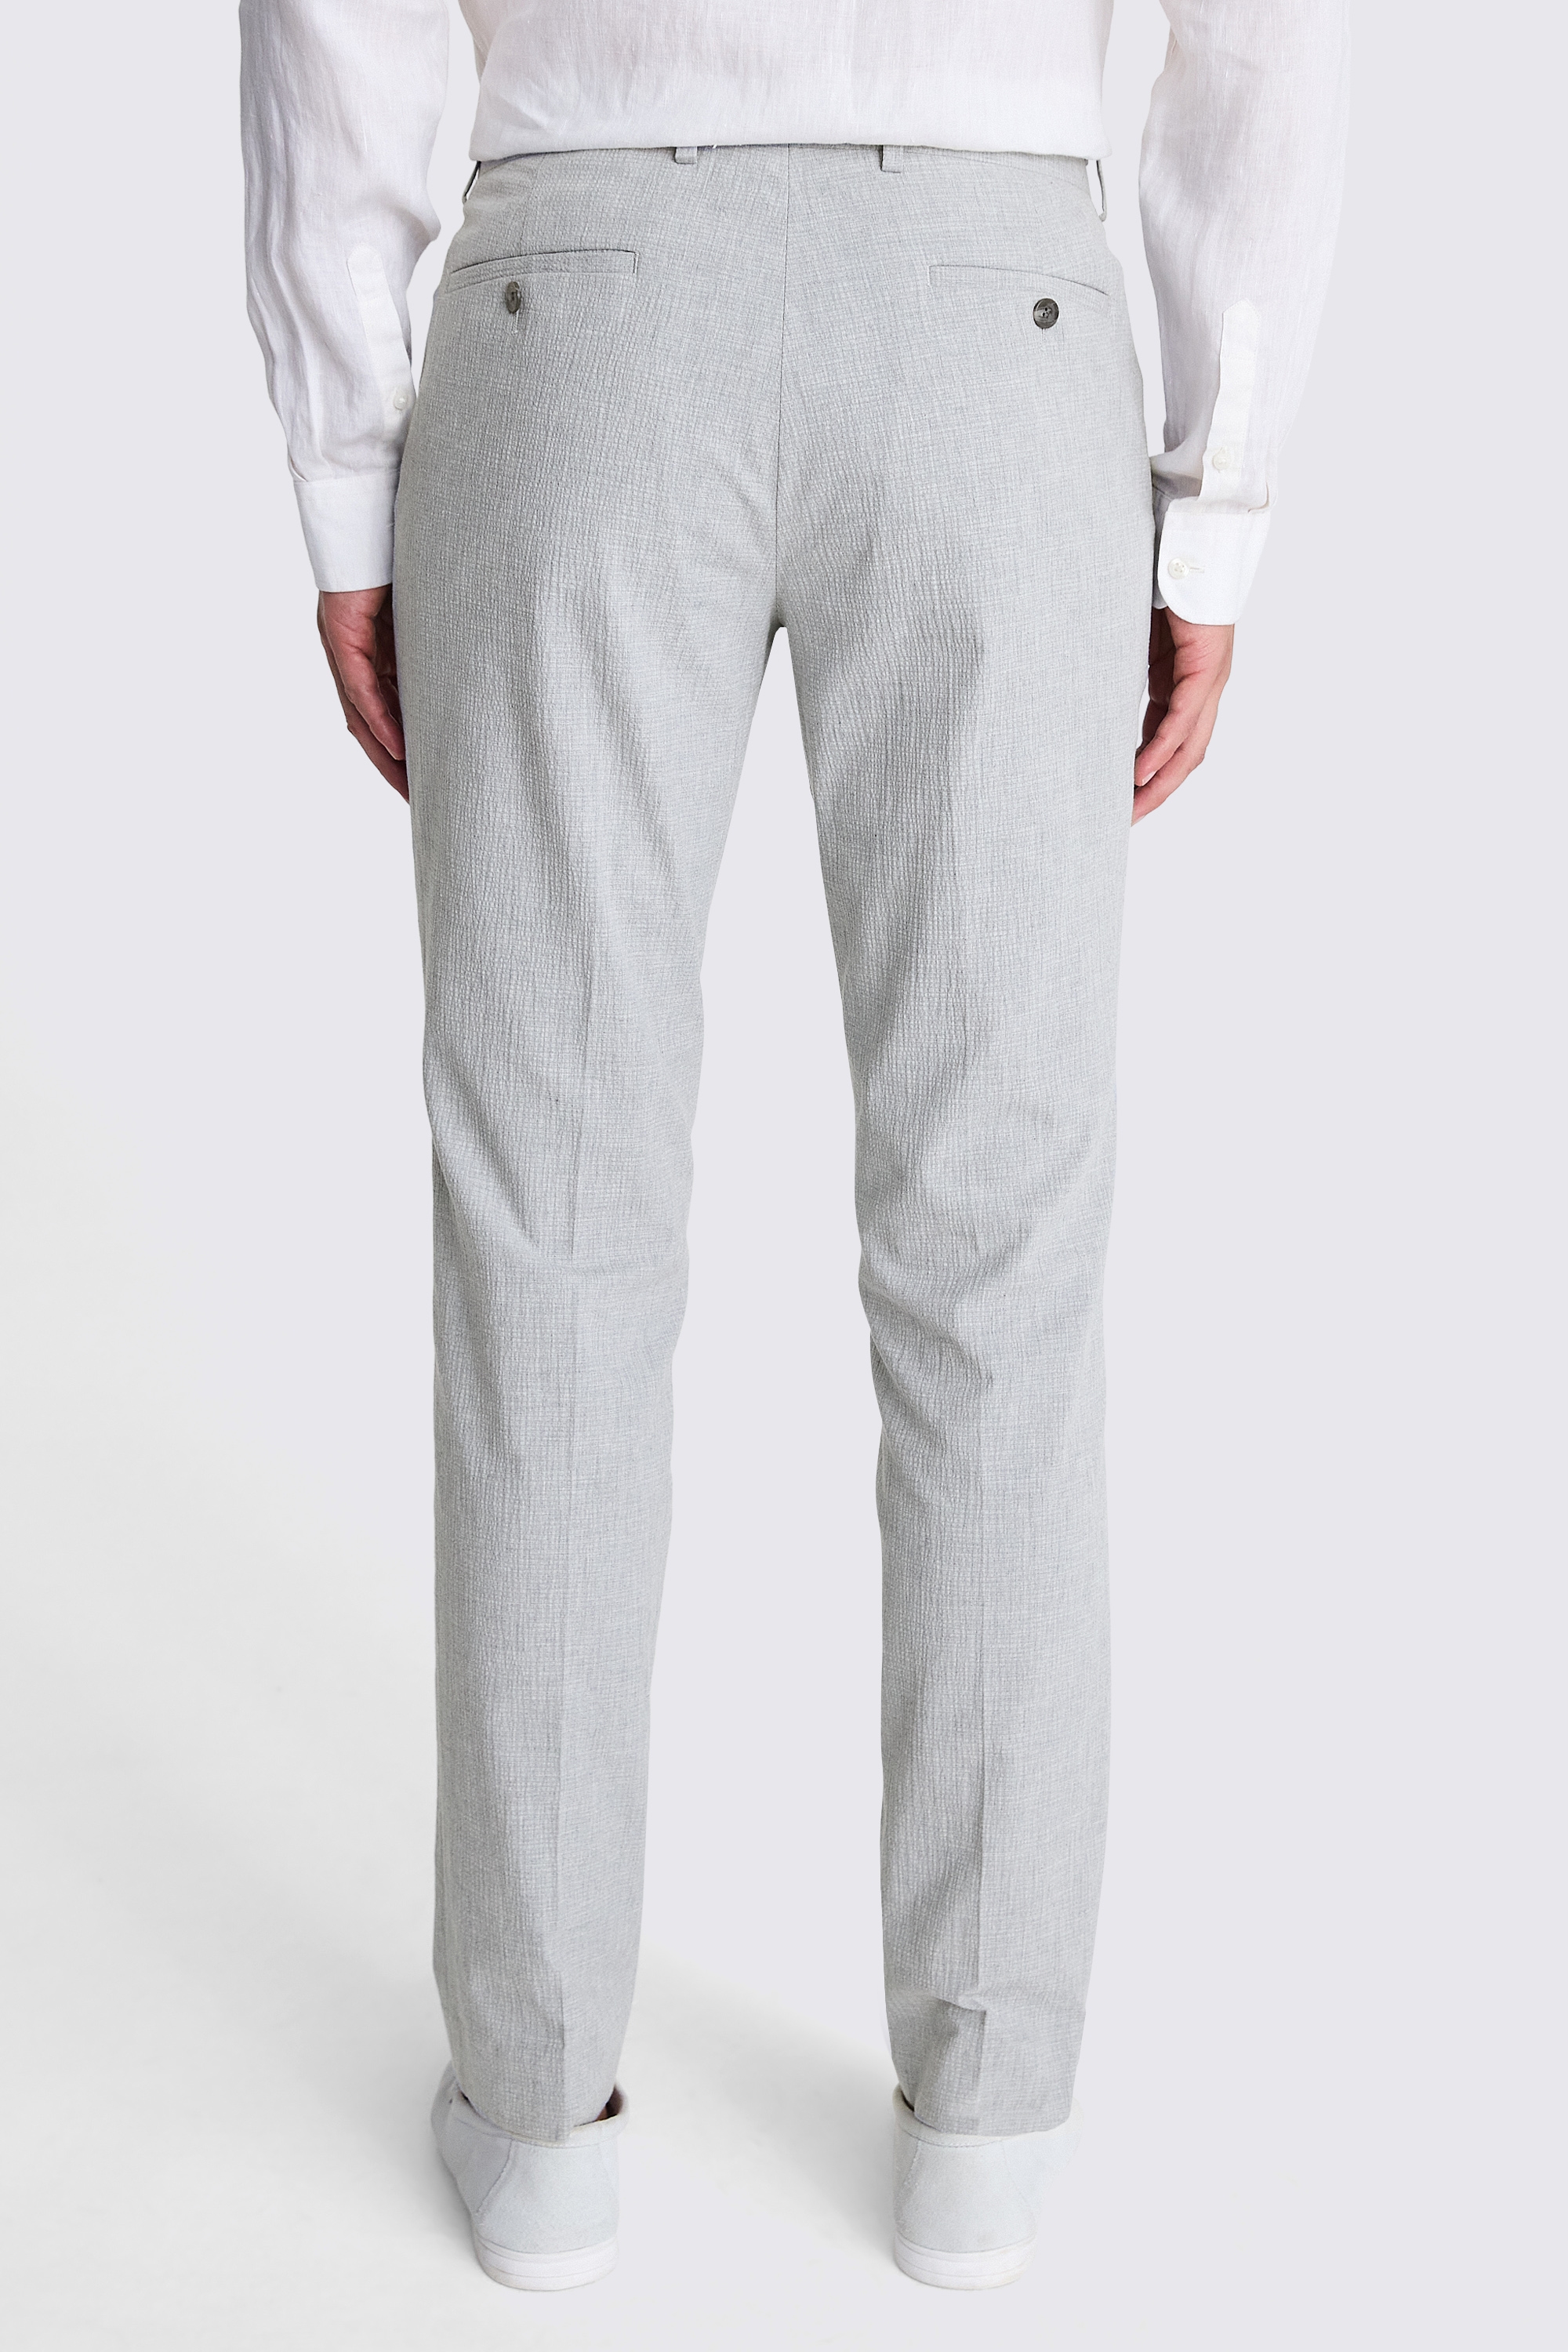 Slim Fit Light Grey Seersucker Trousers | Buy Online at Moss